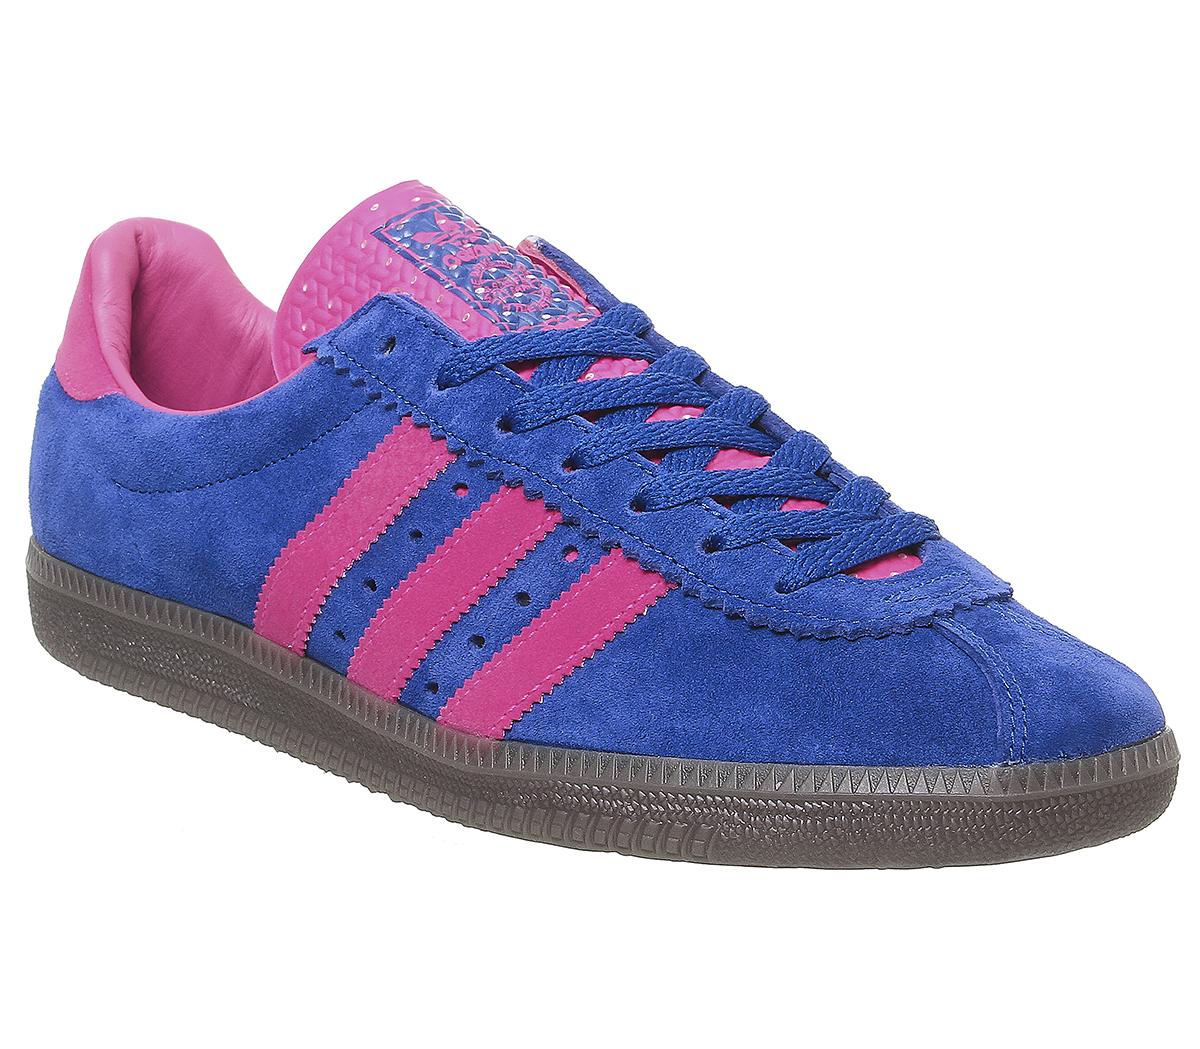 adidas padiham pink and blue